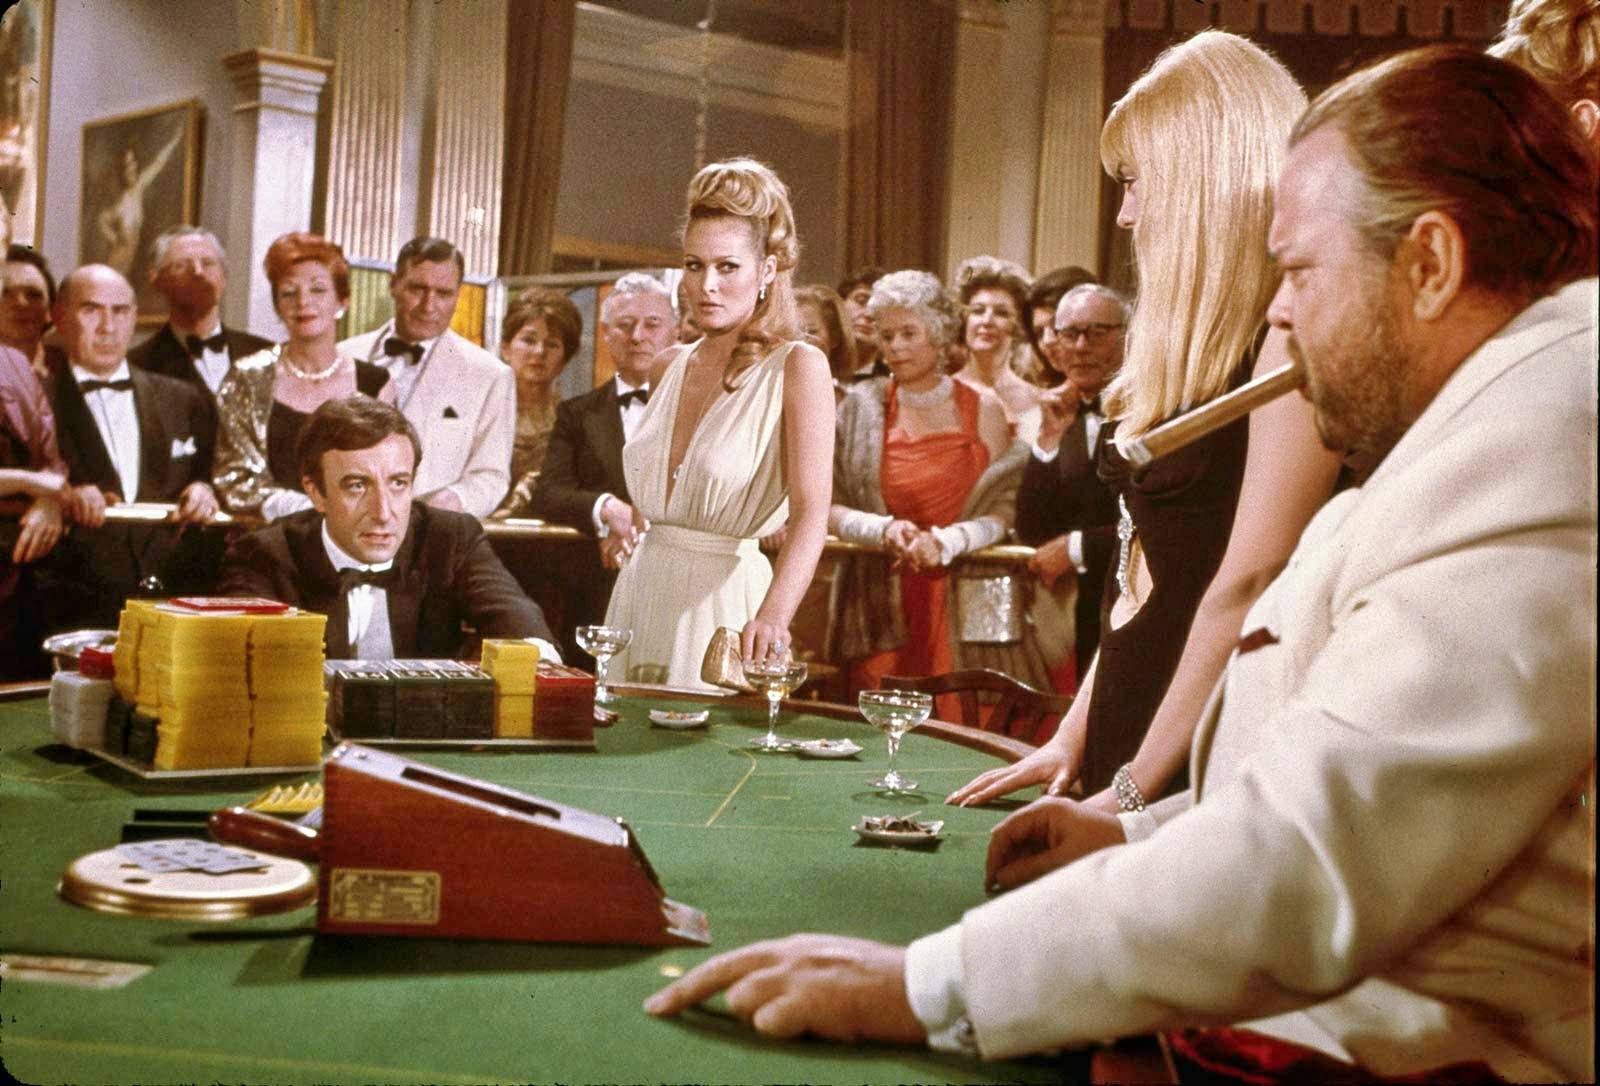 Ursula Andress as Vesper Lynd in "Casino Royale" in 1967